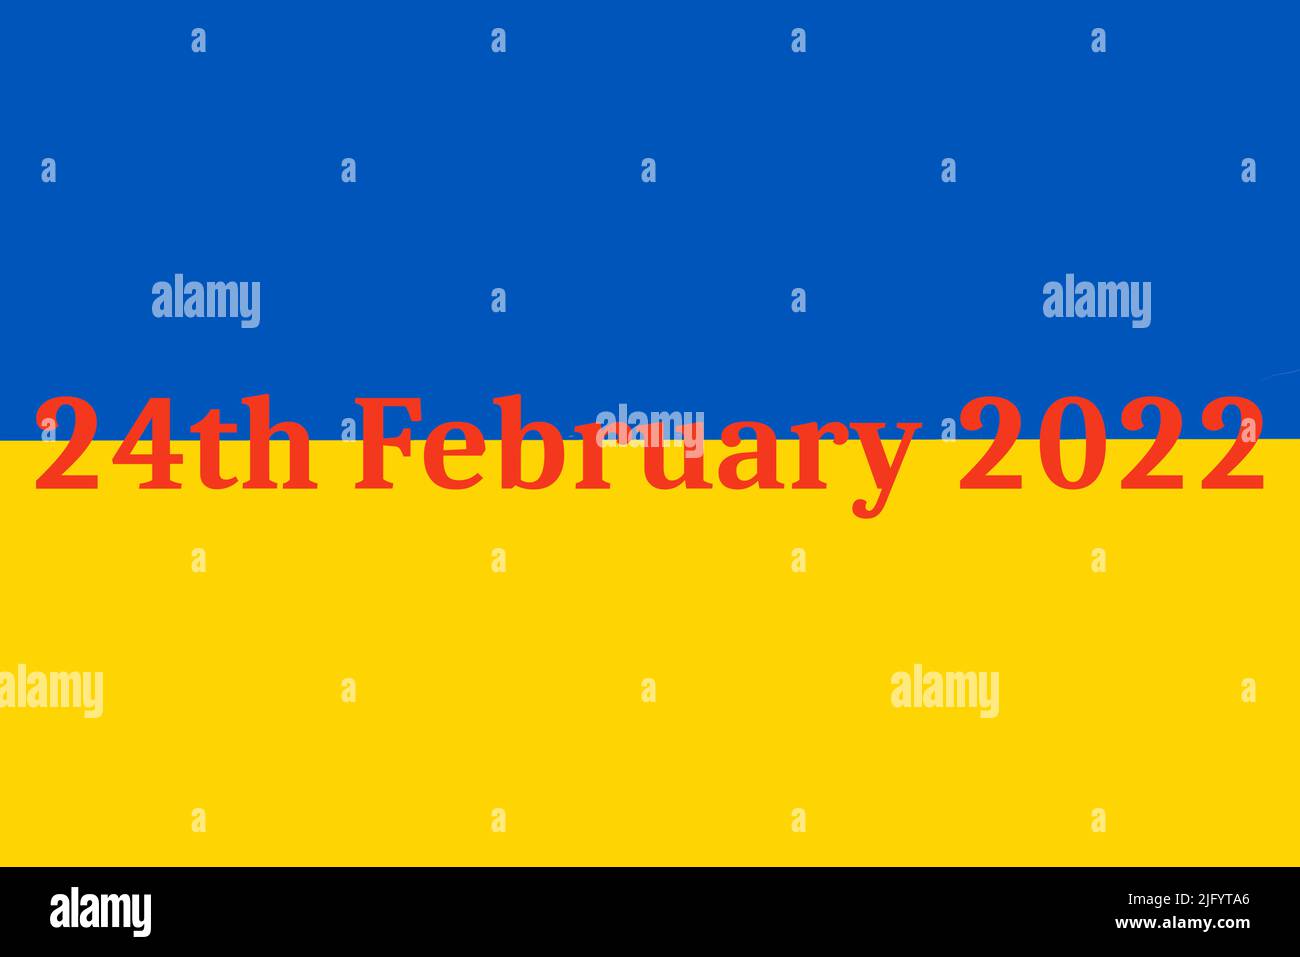 24th de febrero de 2022 texto sobre la bandera ucraniana. Rusia invadió Ucrania en una escalada importante de la guerra rusa de Ucrania que comenzó en el concepto de 2014 Foto de stock